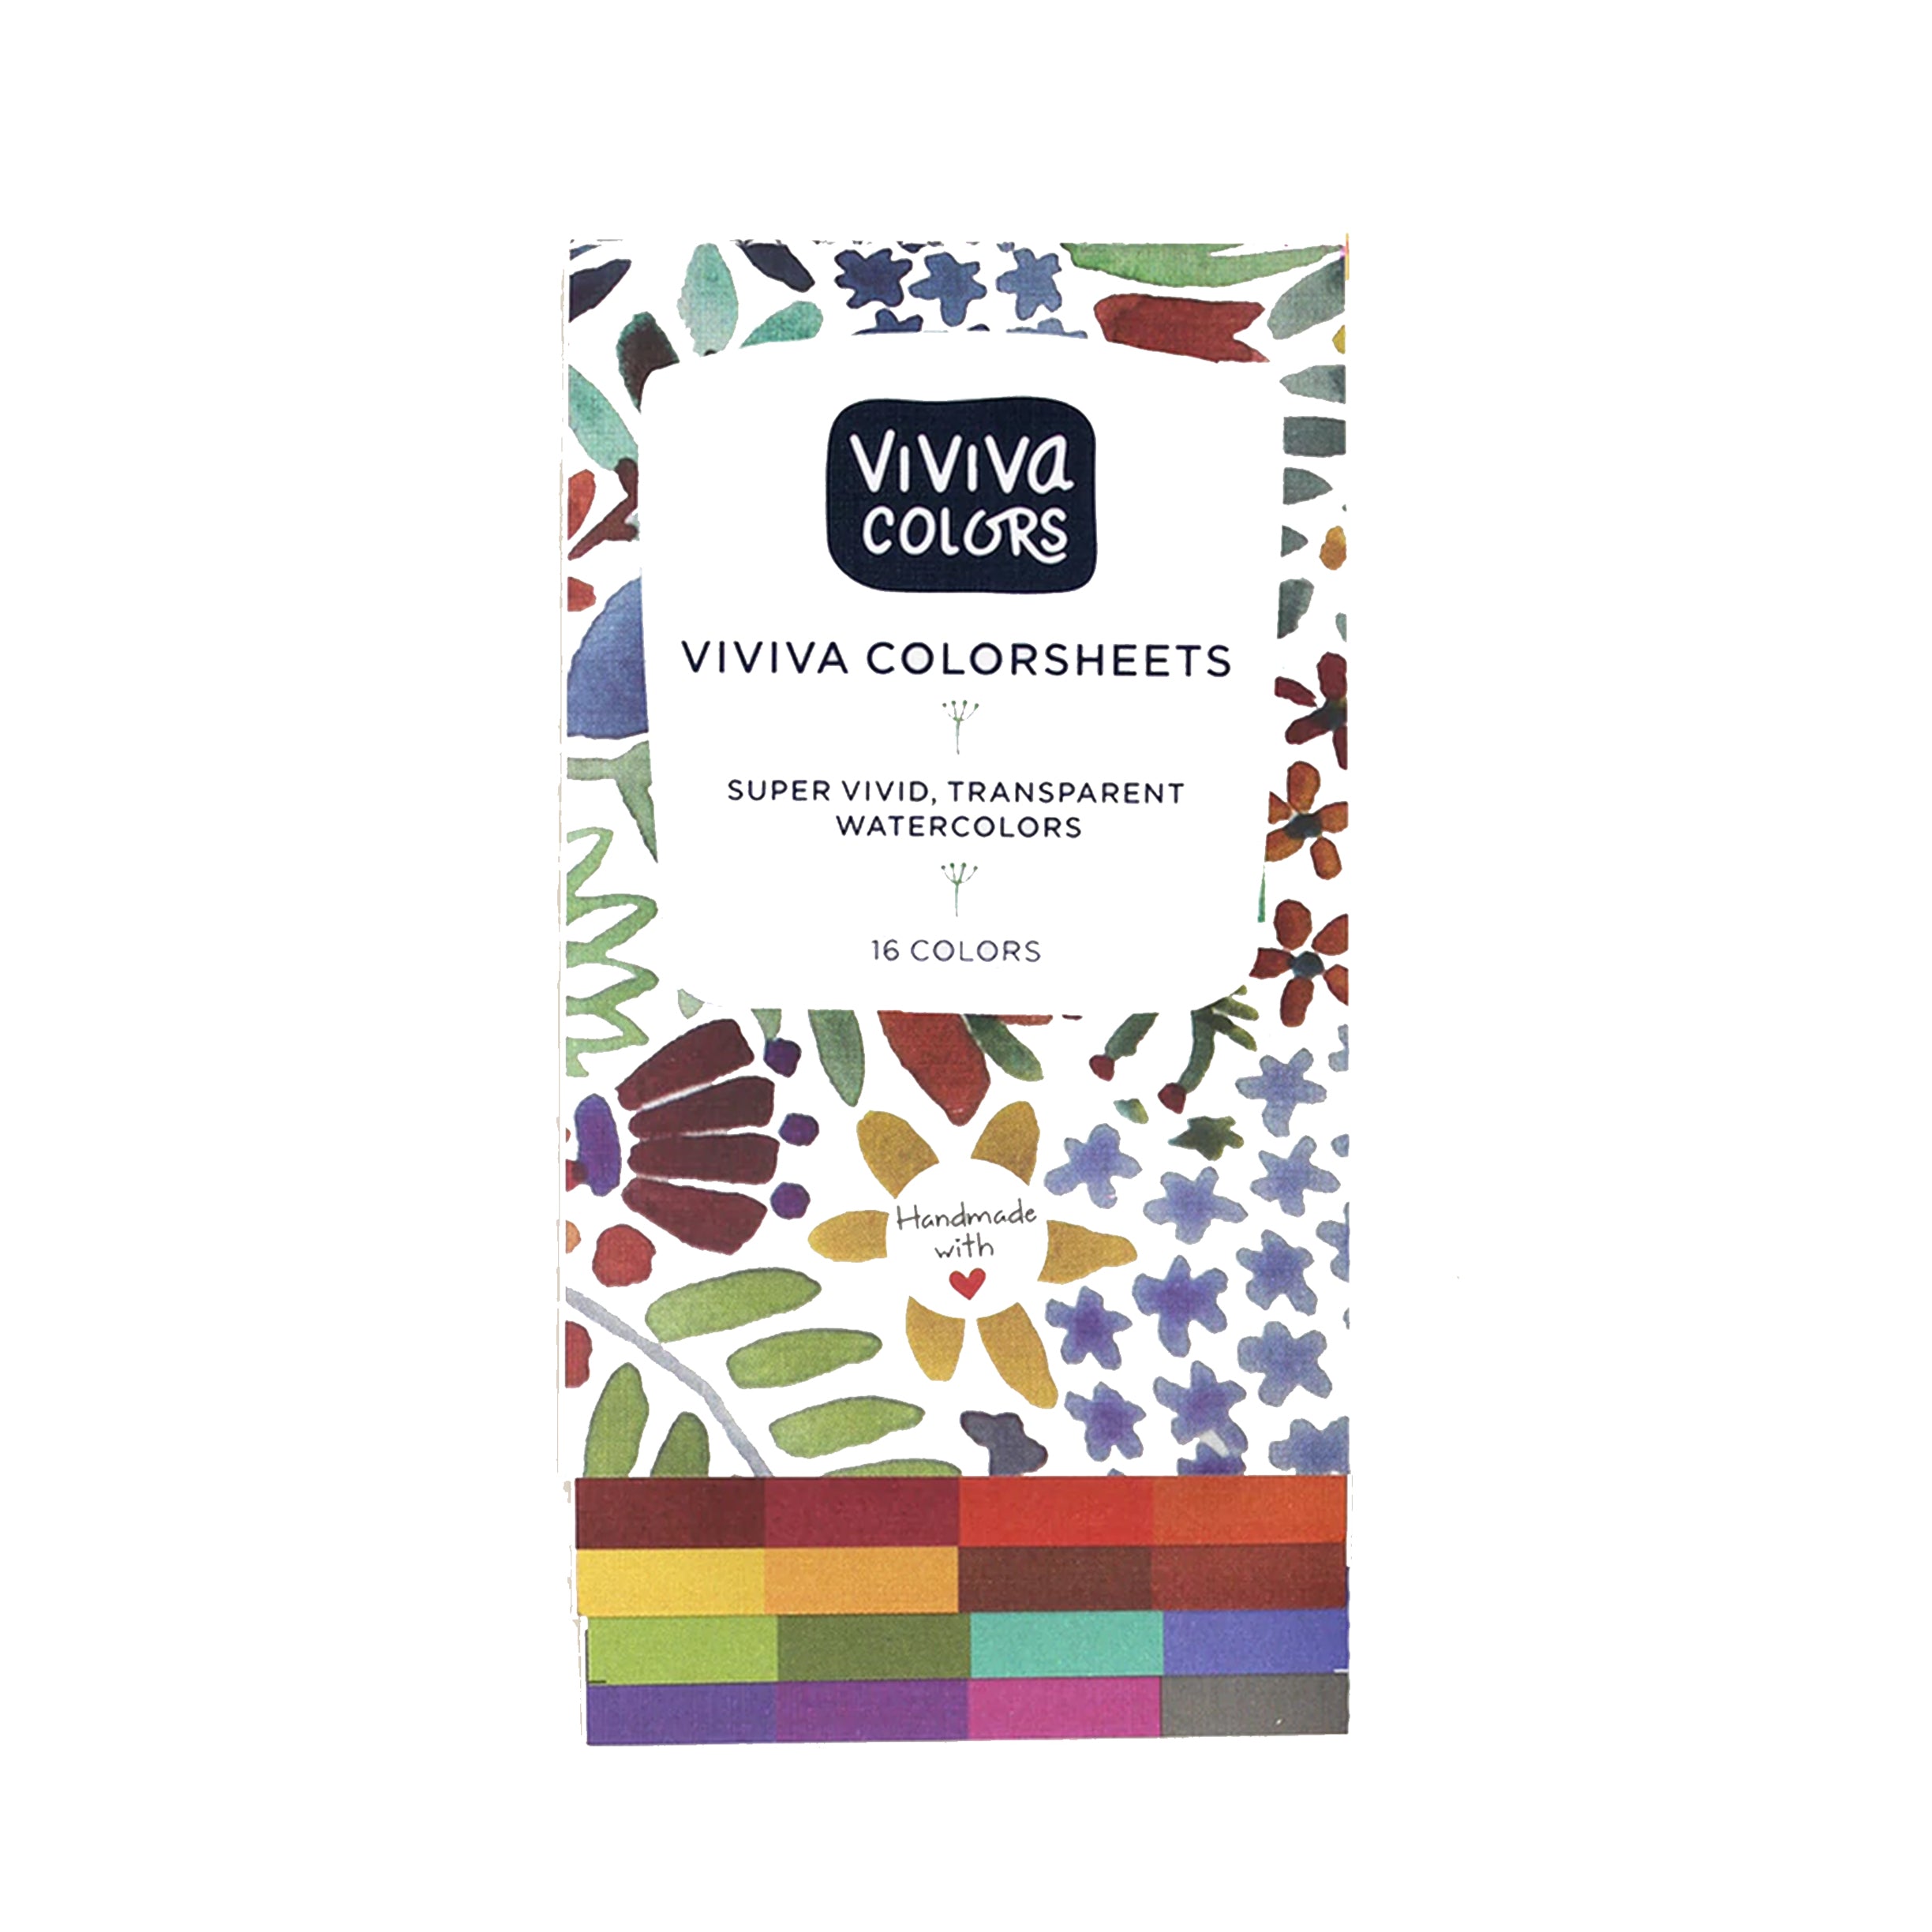 Viviva Watercolor Colorsheets, Original Set of 16